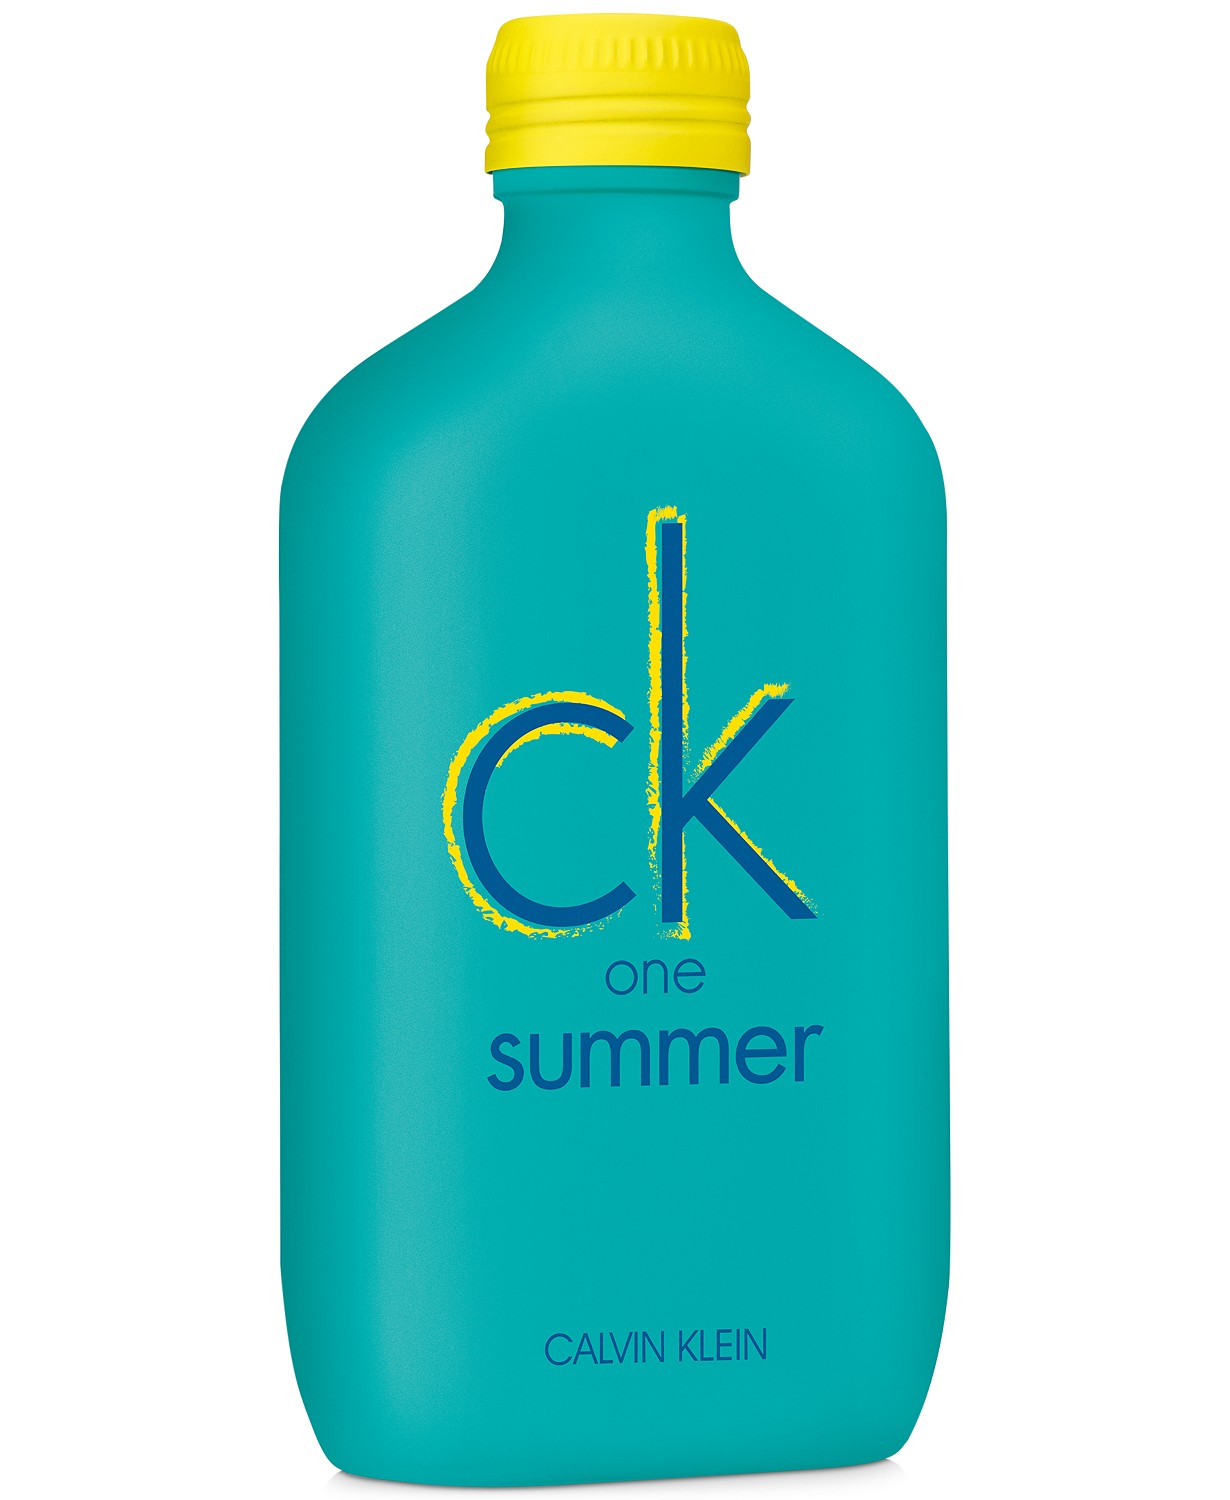 CK One Summer 2020 Calvin Klein аромат — новый аромат для мужчин и